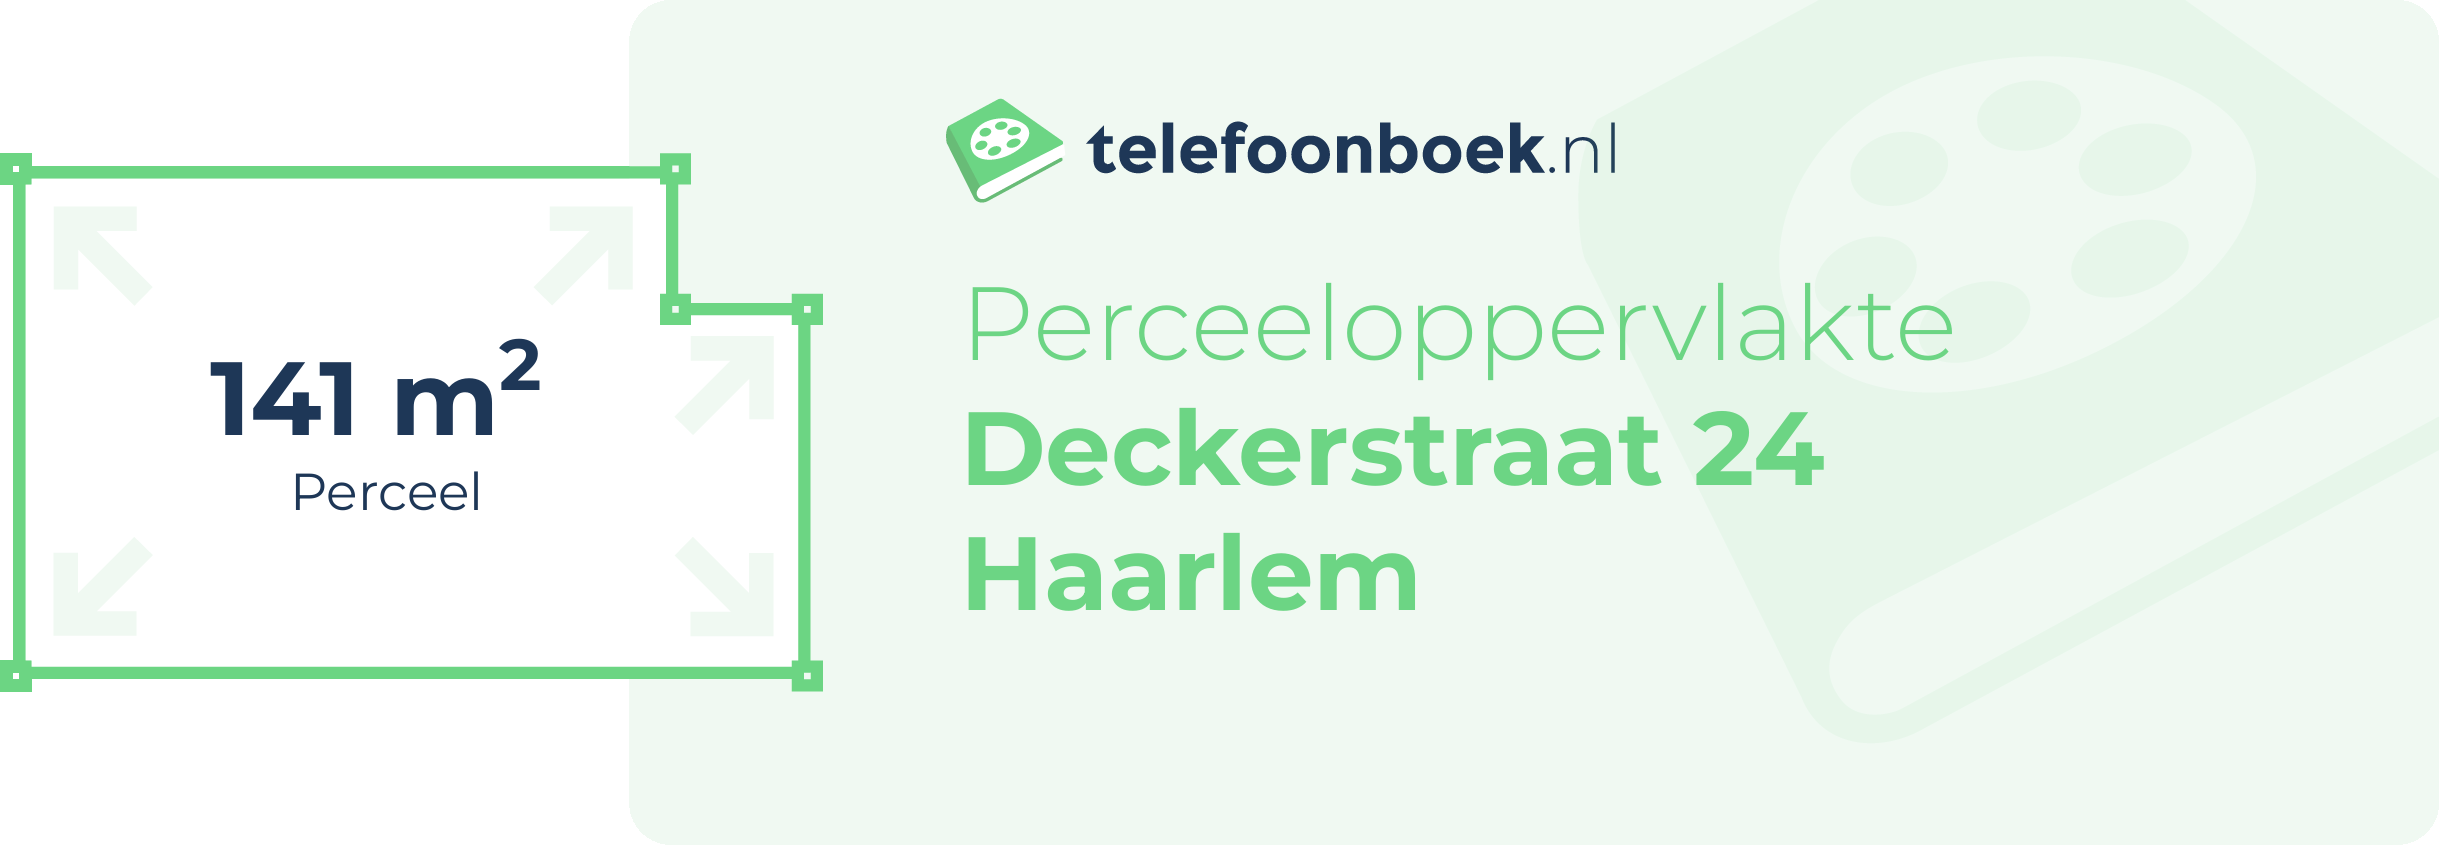 Perceeloppervlakte Deckerstraat 24 Haarlem